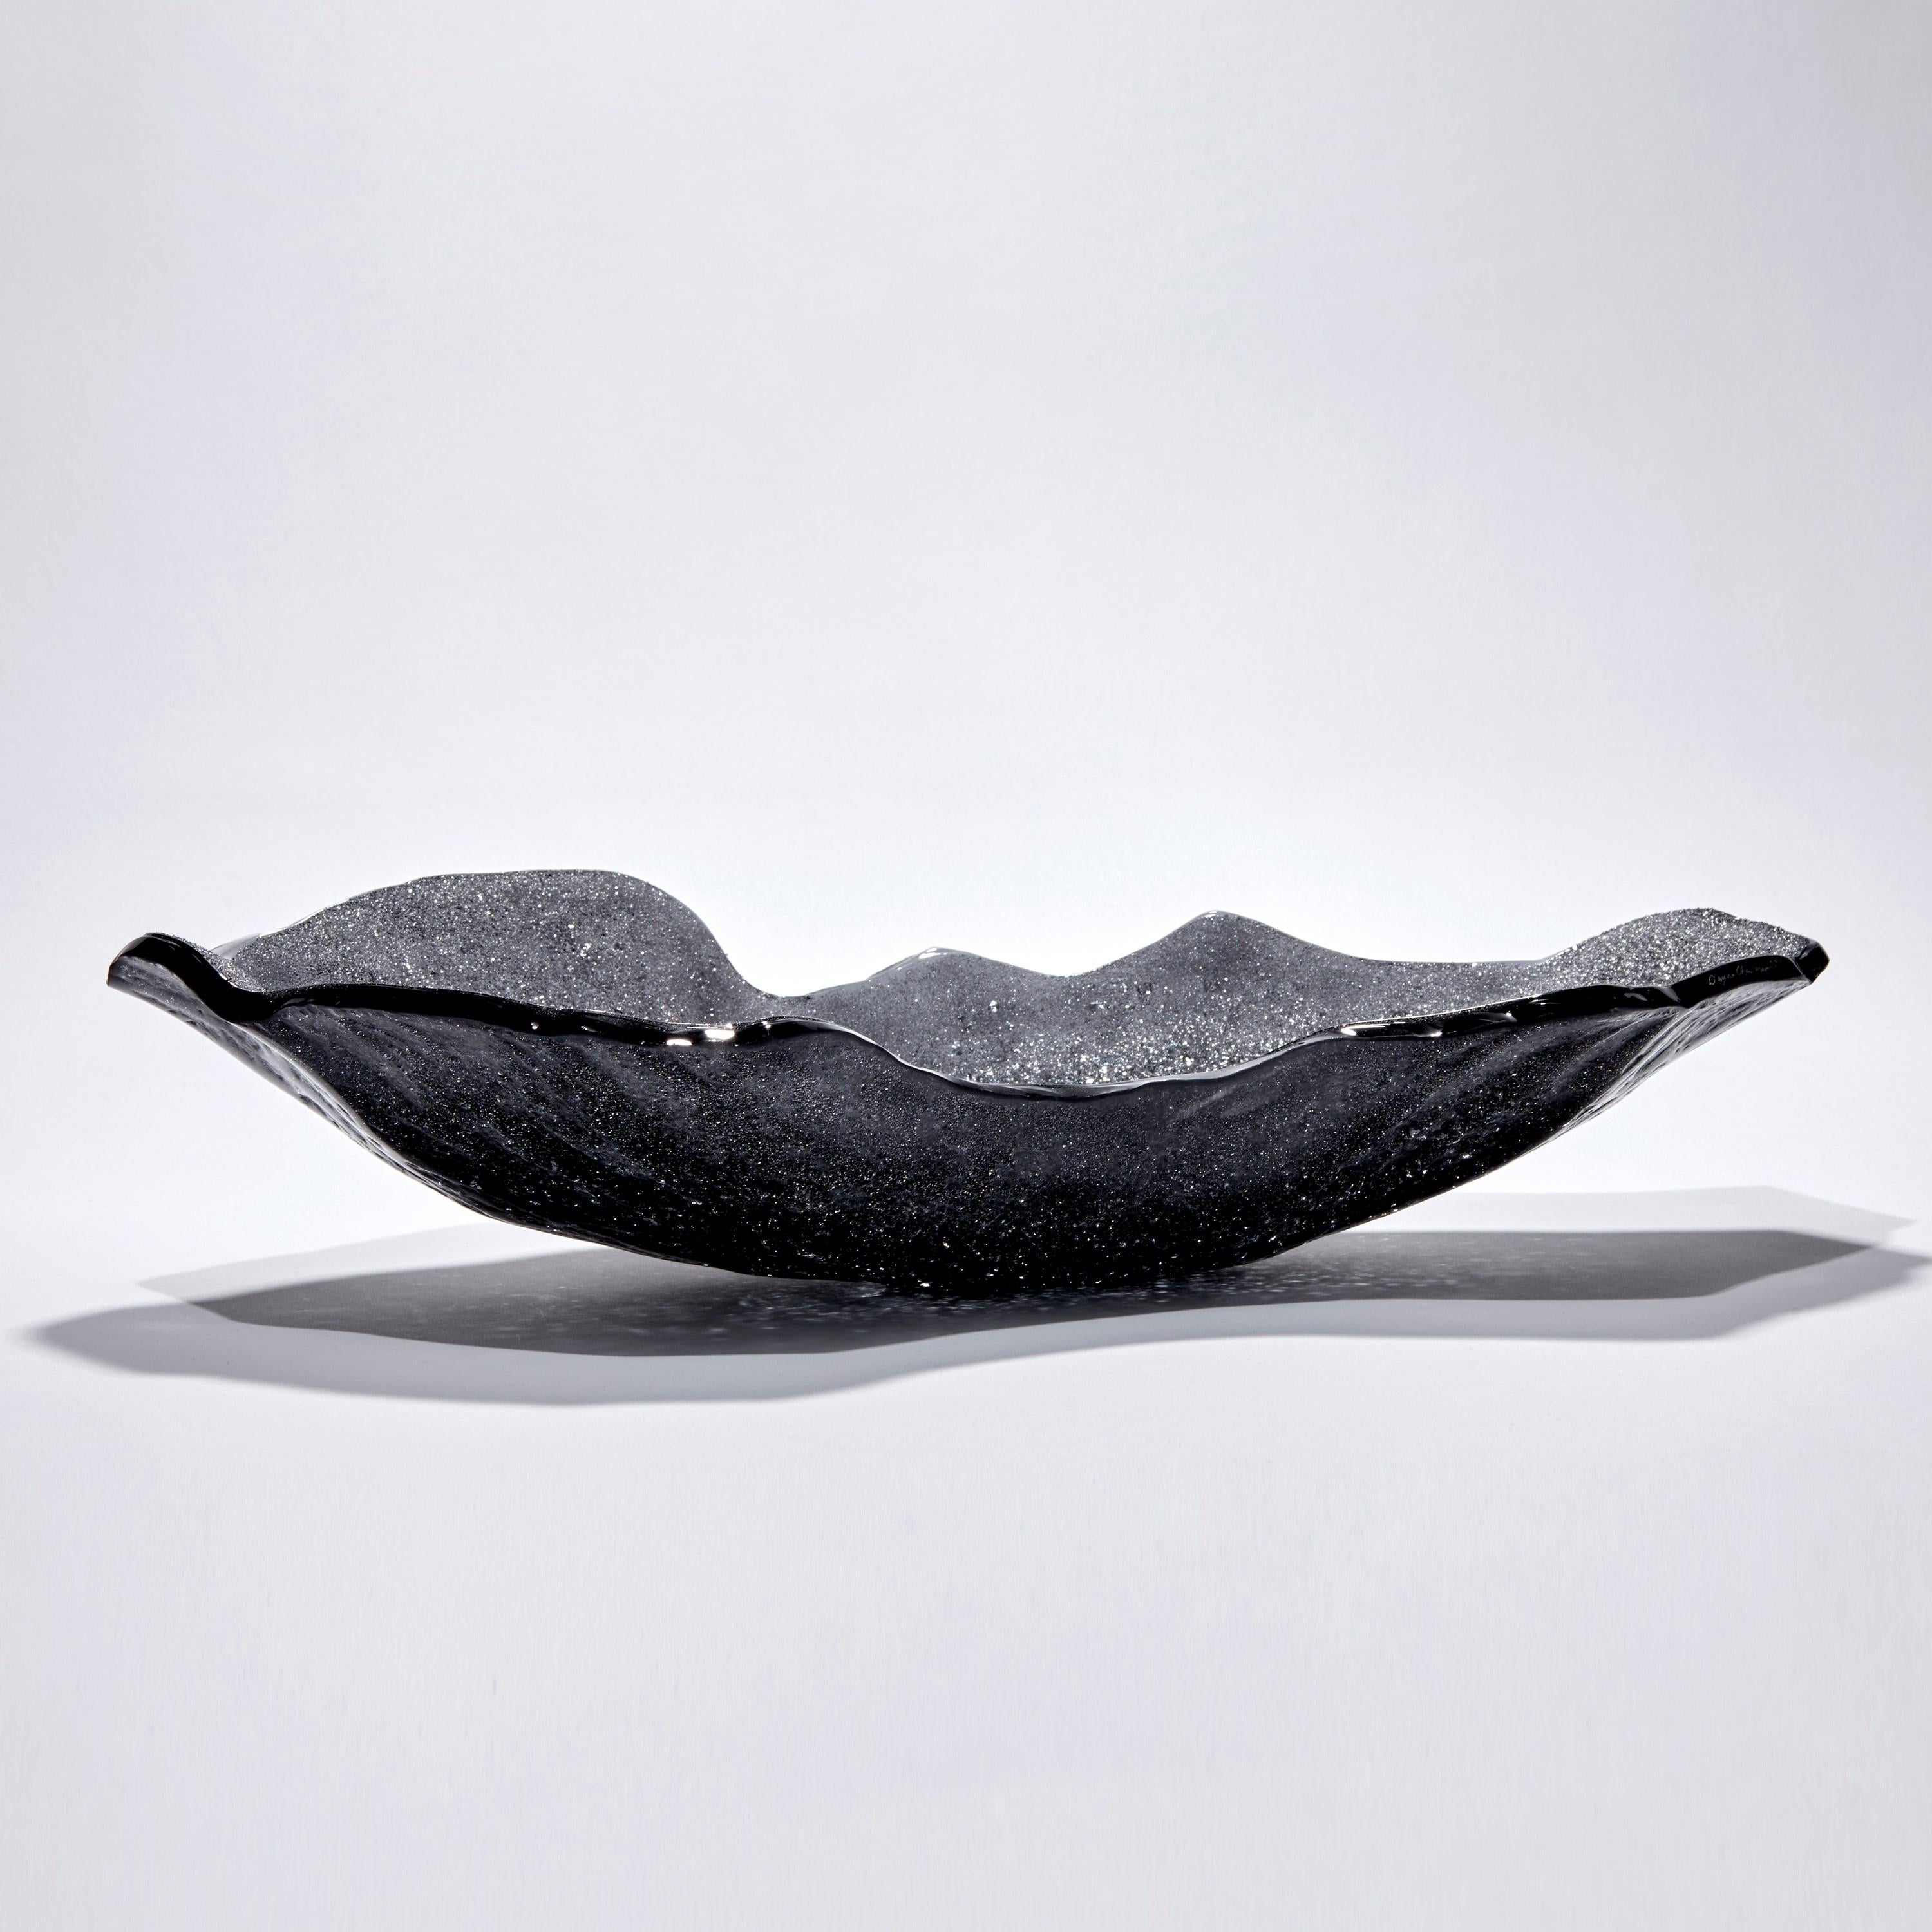 Organic Modern Celestine V, black & Grey Sparkly Glass Sculptural Centrepiece by Wayne Charmer For Sale